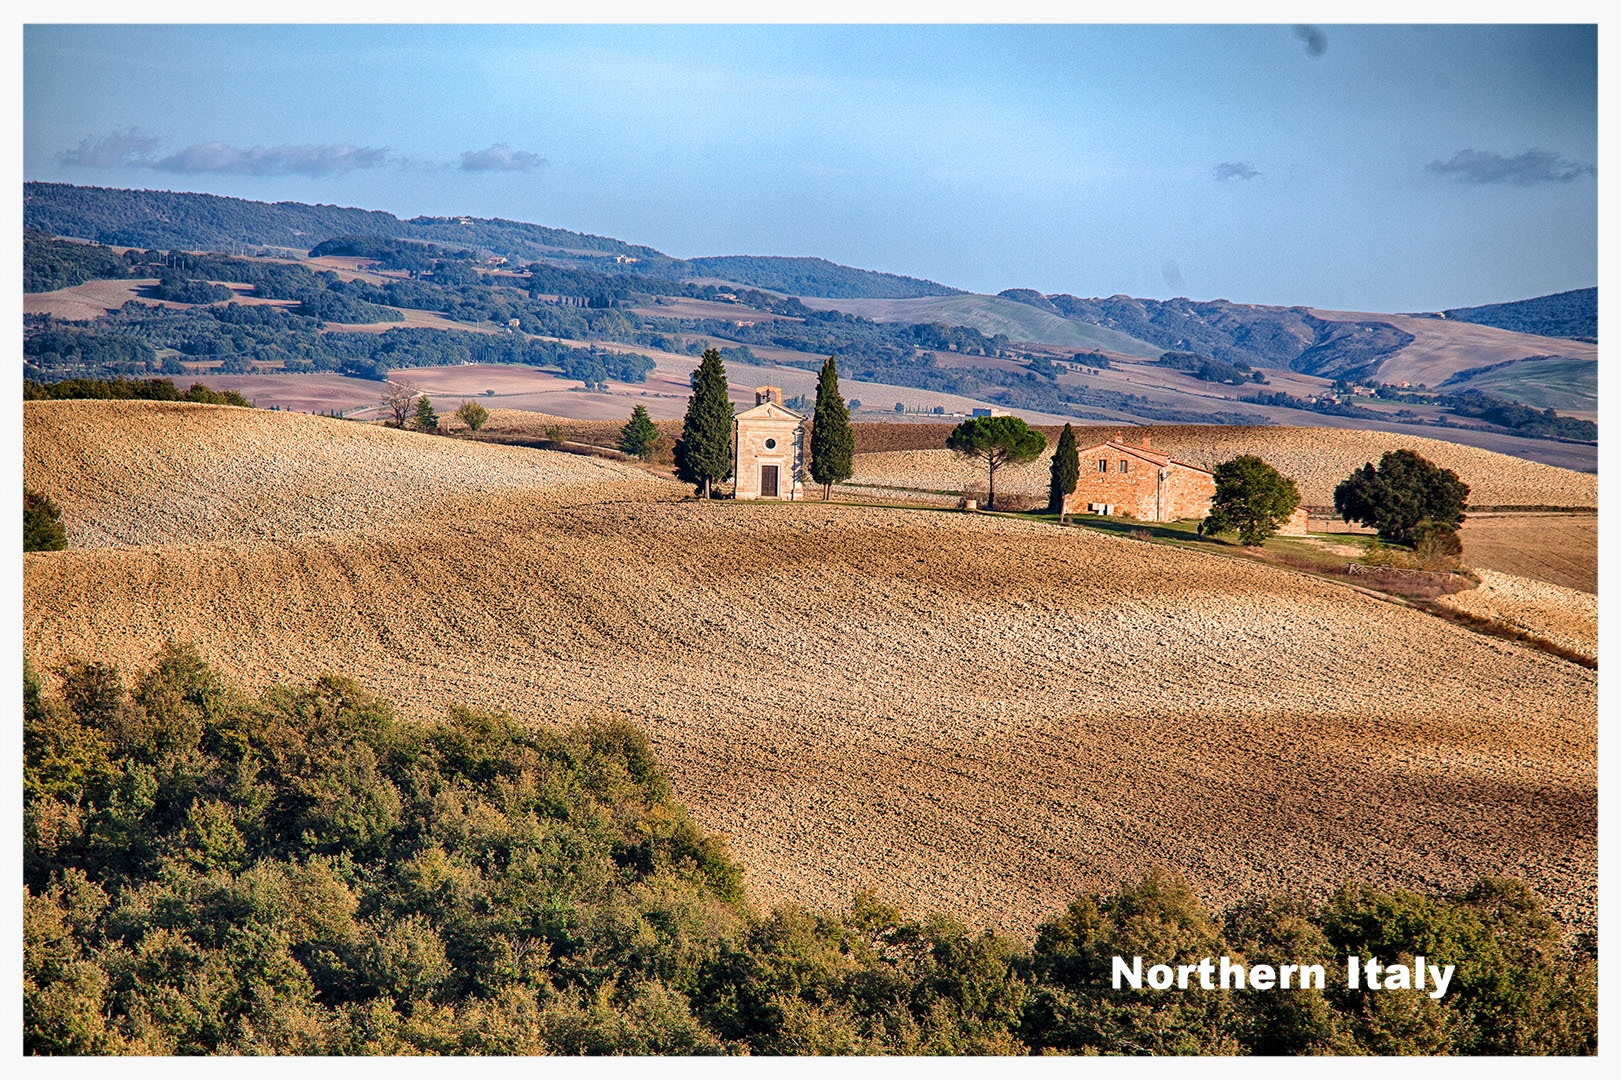    Click to view Northern Italy Portfolio   